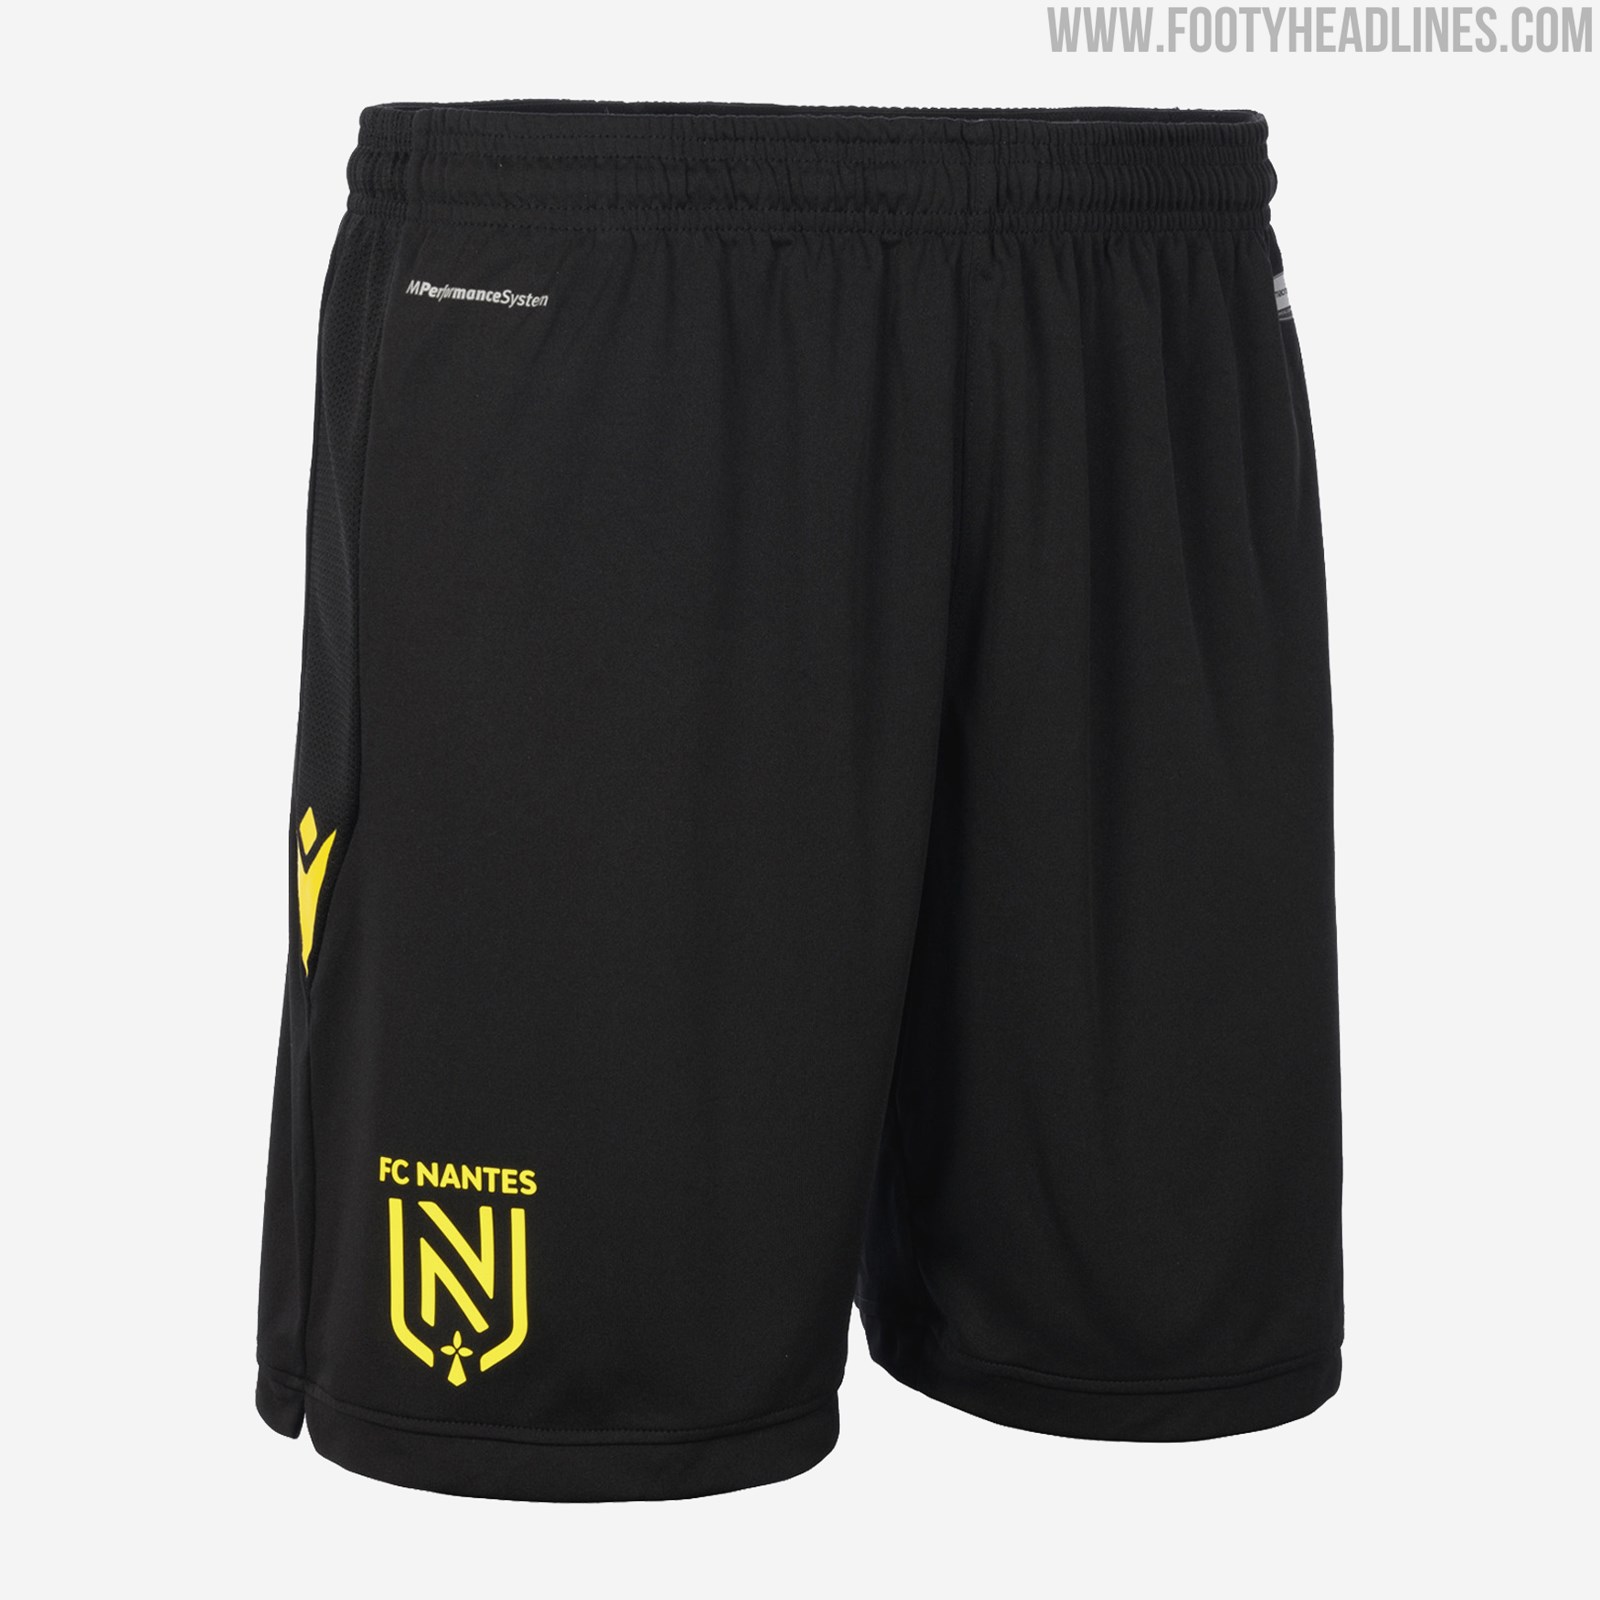 FC Nantes 20-21 Away Kit Released - Footy Headlines